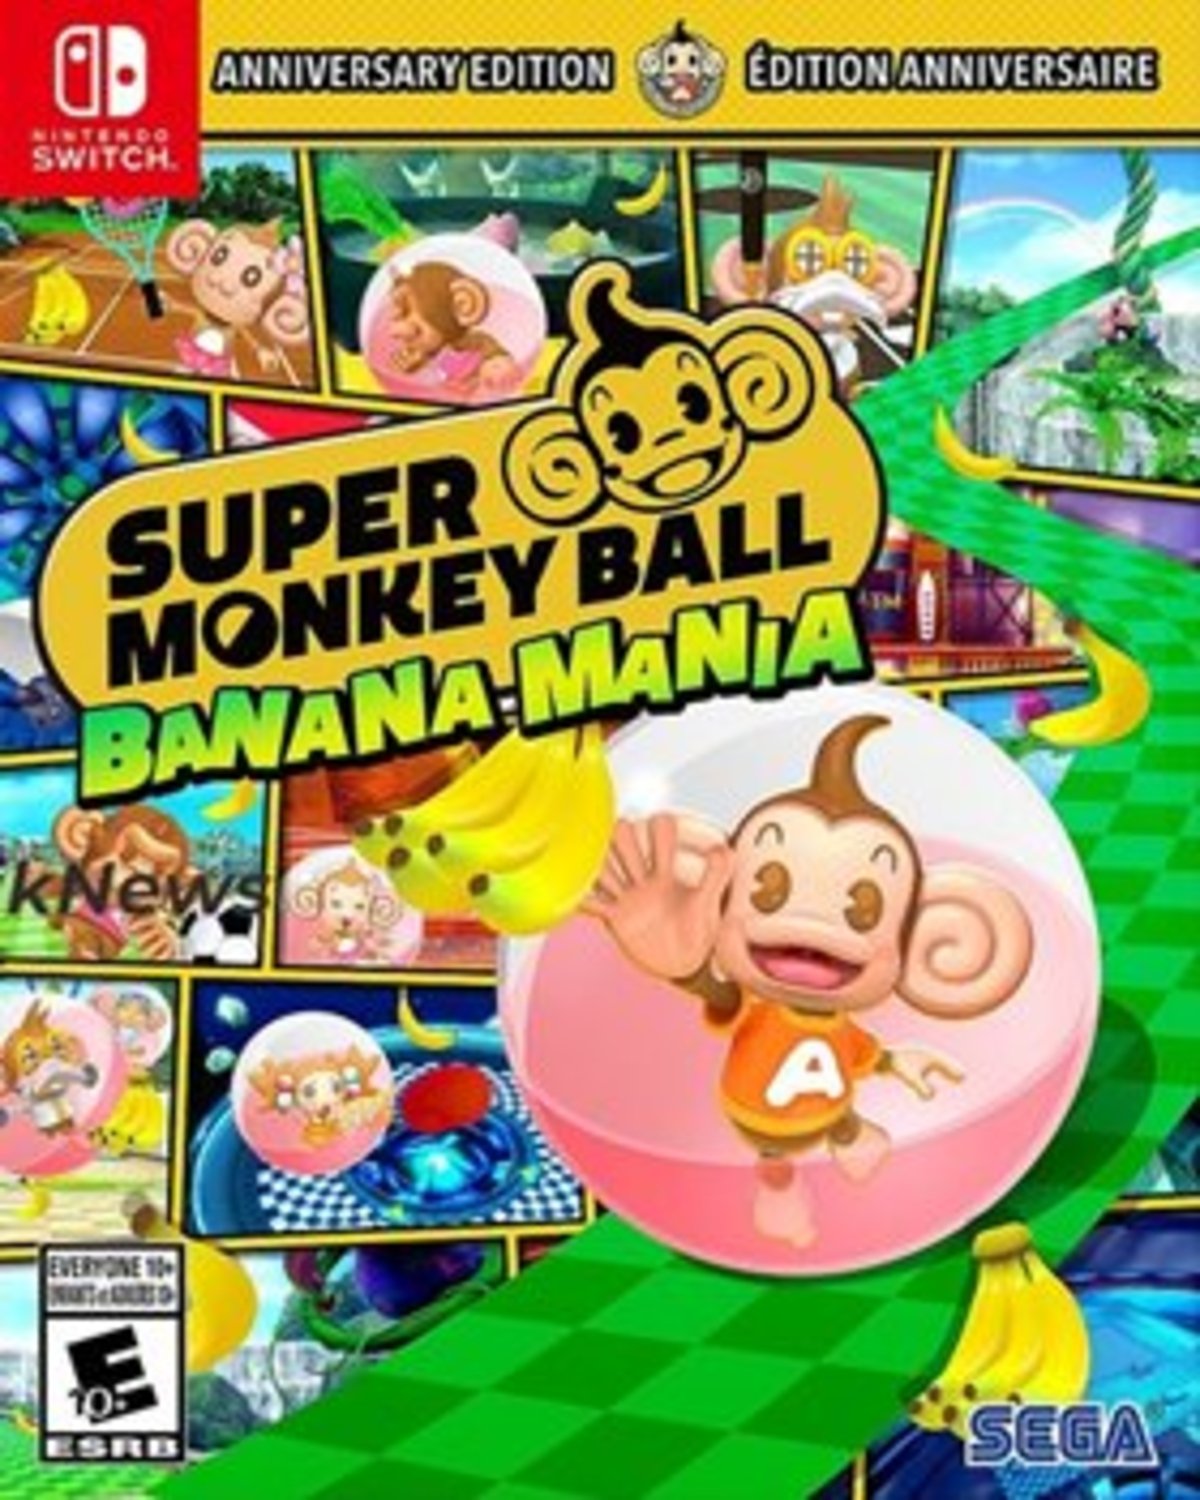 Super Monkey Ball Banana Mania review